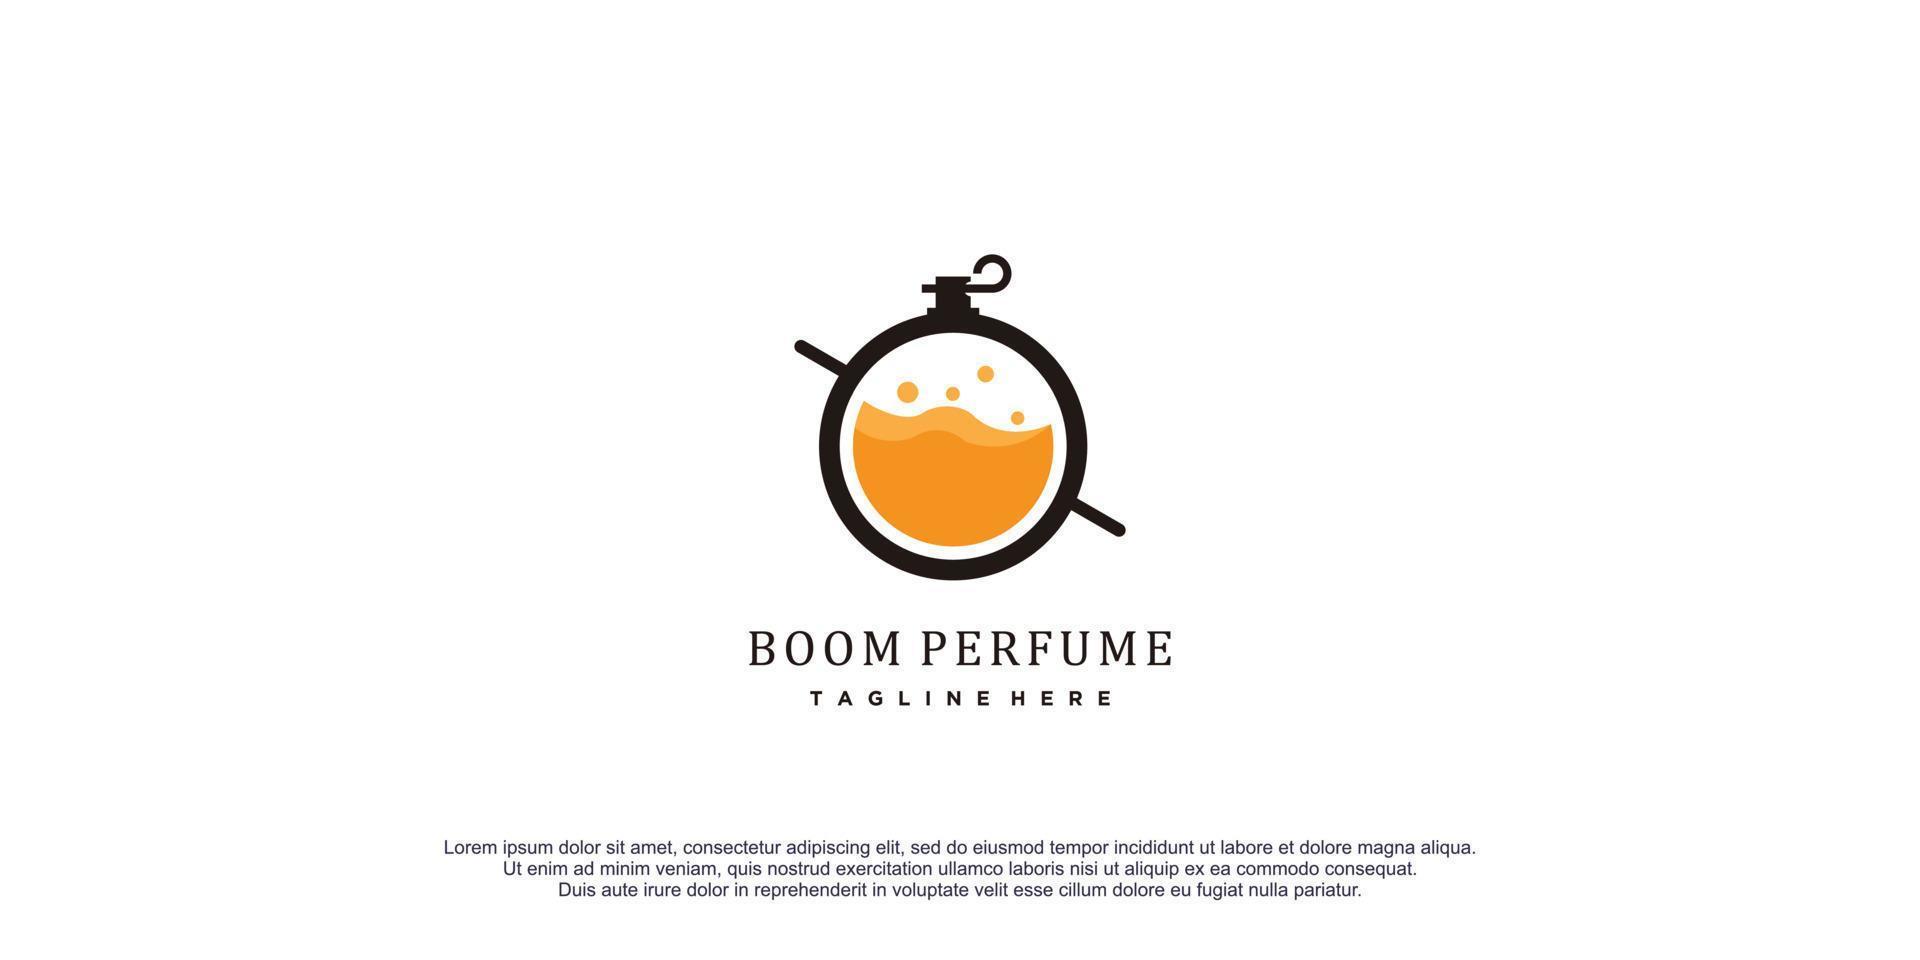 Perfume logo with granade concept design vector icon illustration